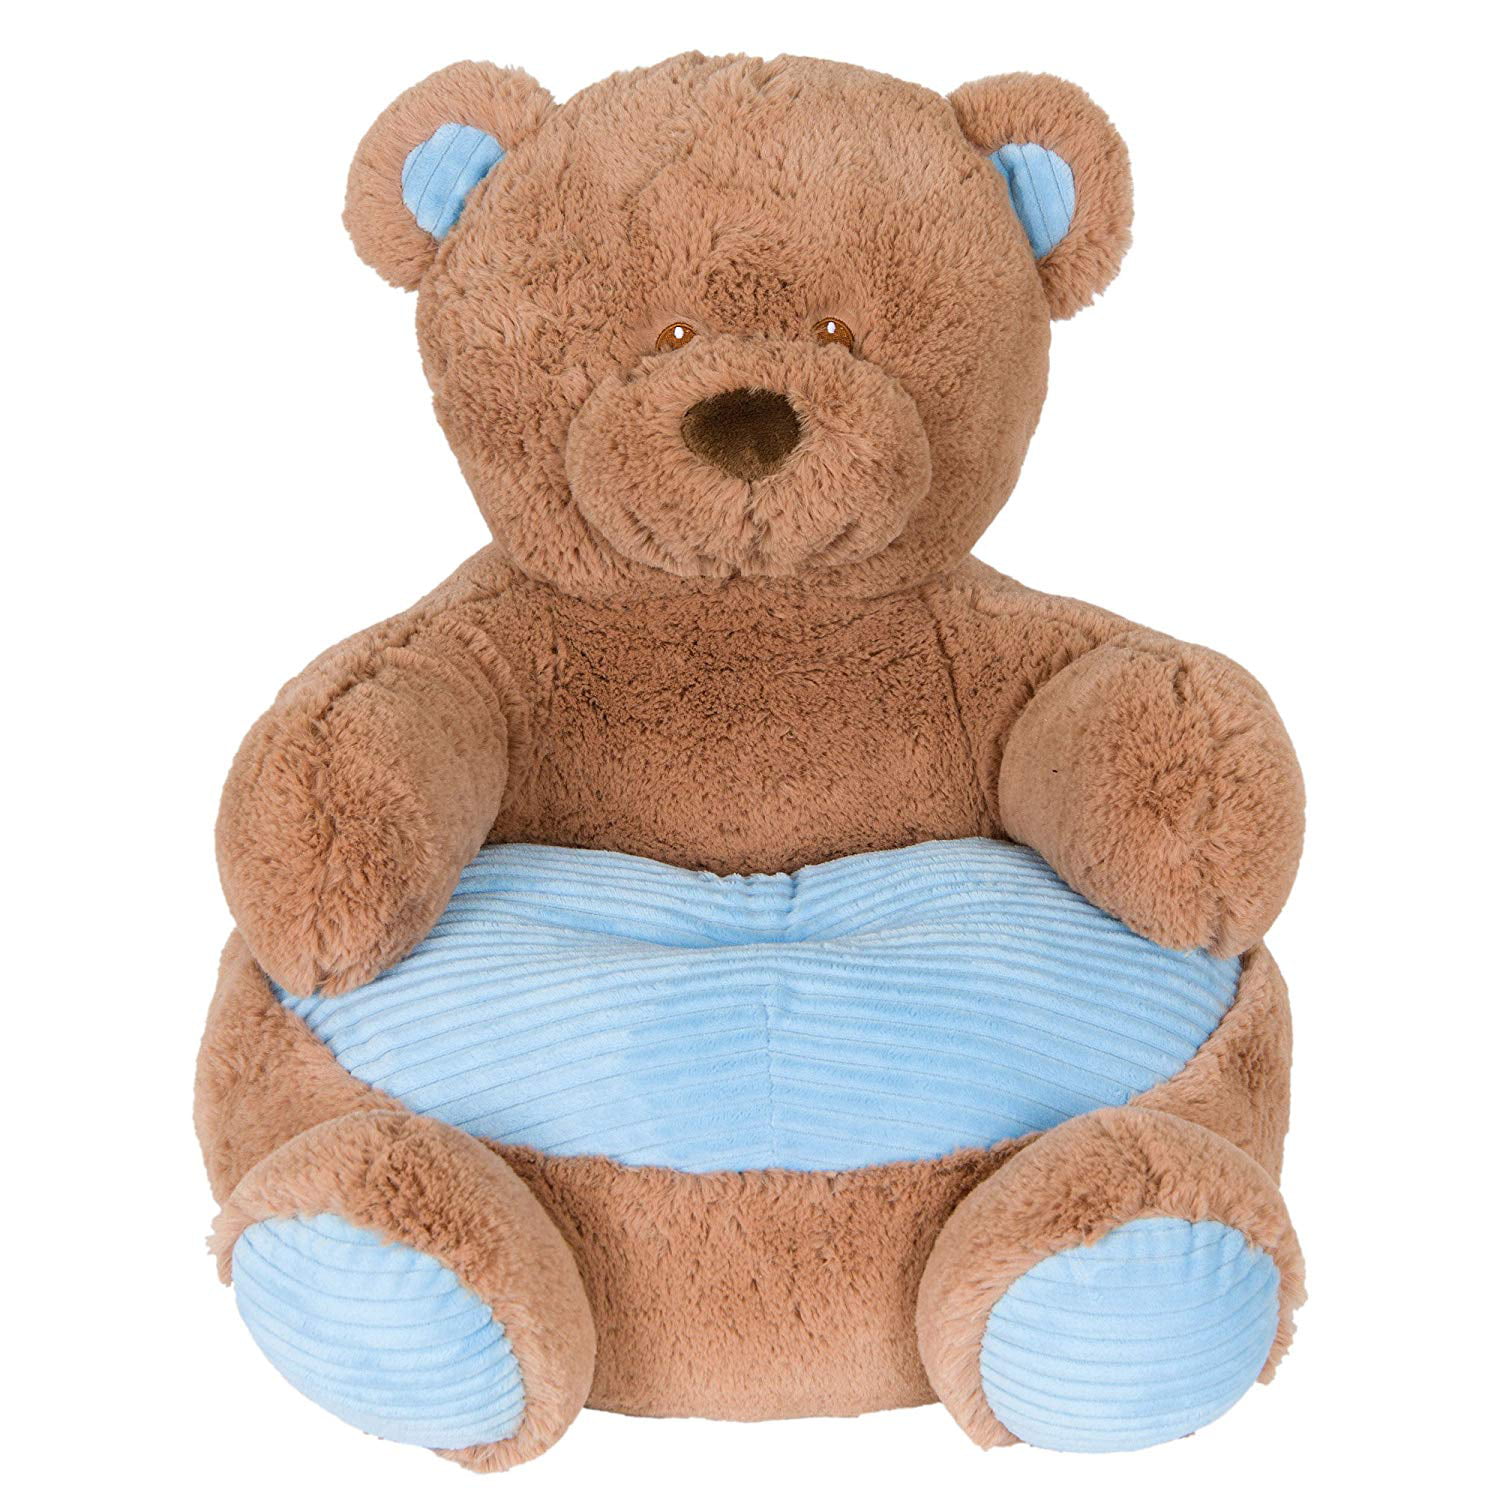 Soft Plush Teddy Bear Childrens Chair With Blue Corduroy Trim 18in By